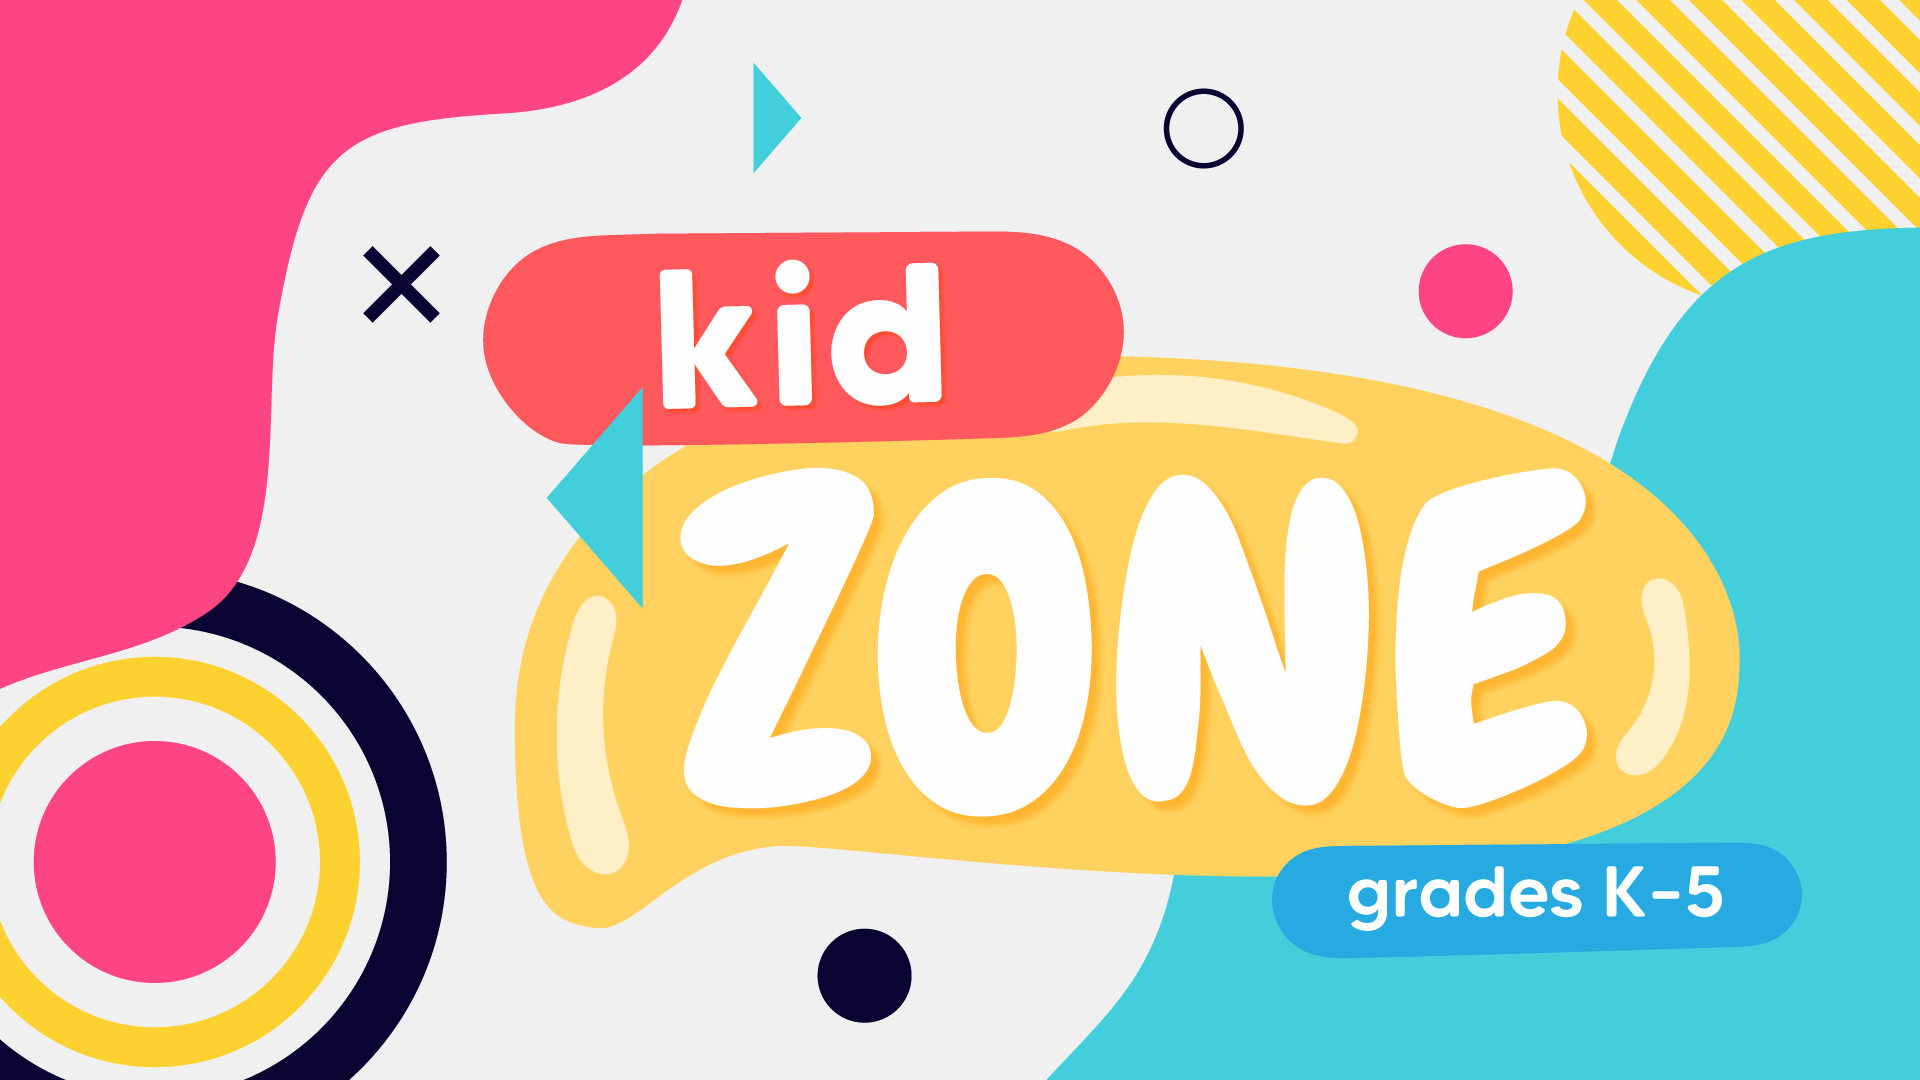 kidzone (grades K–5)